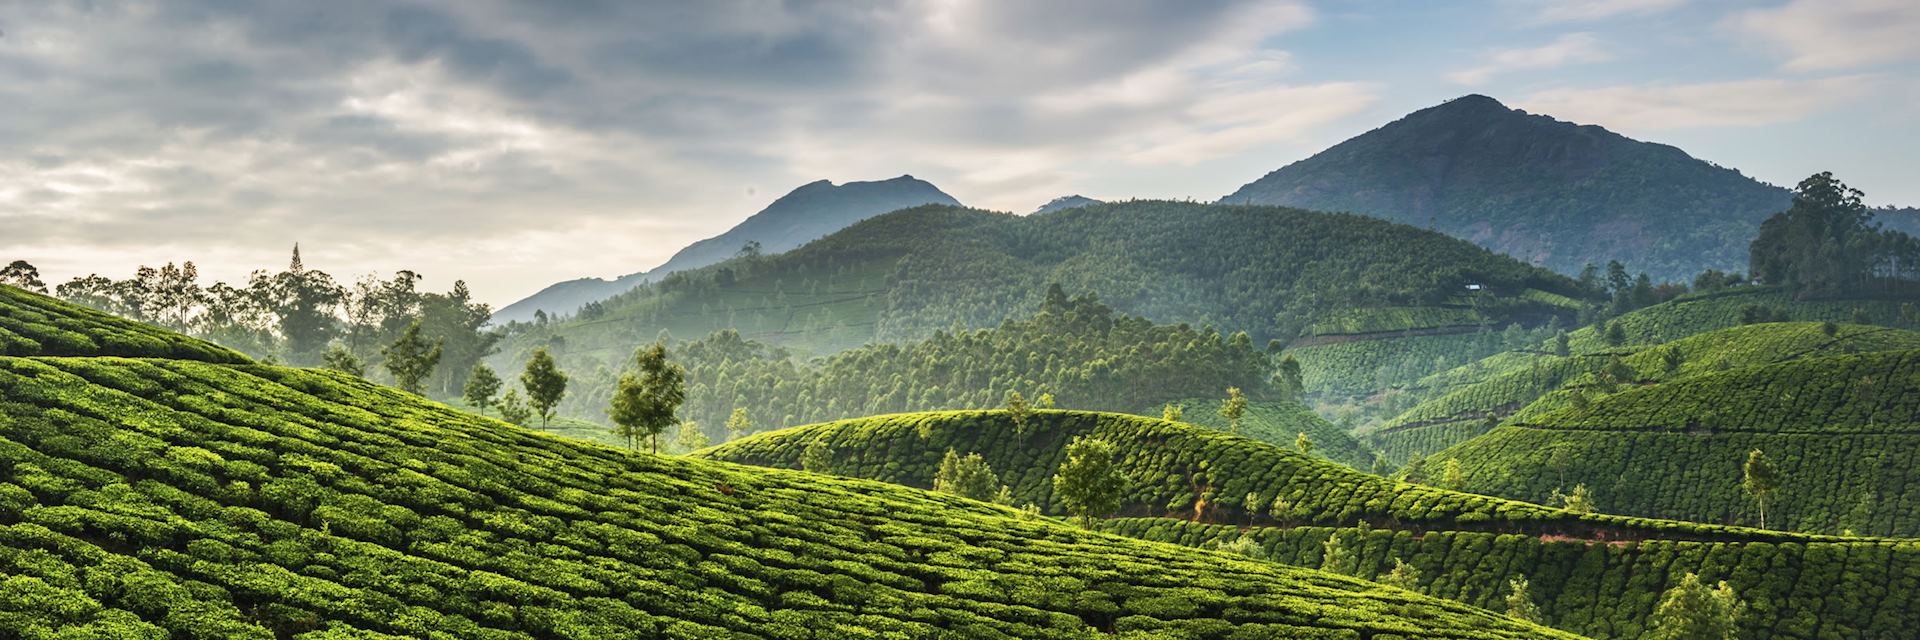 Tea plantation in Munnar